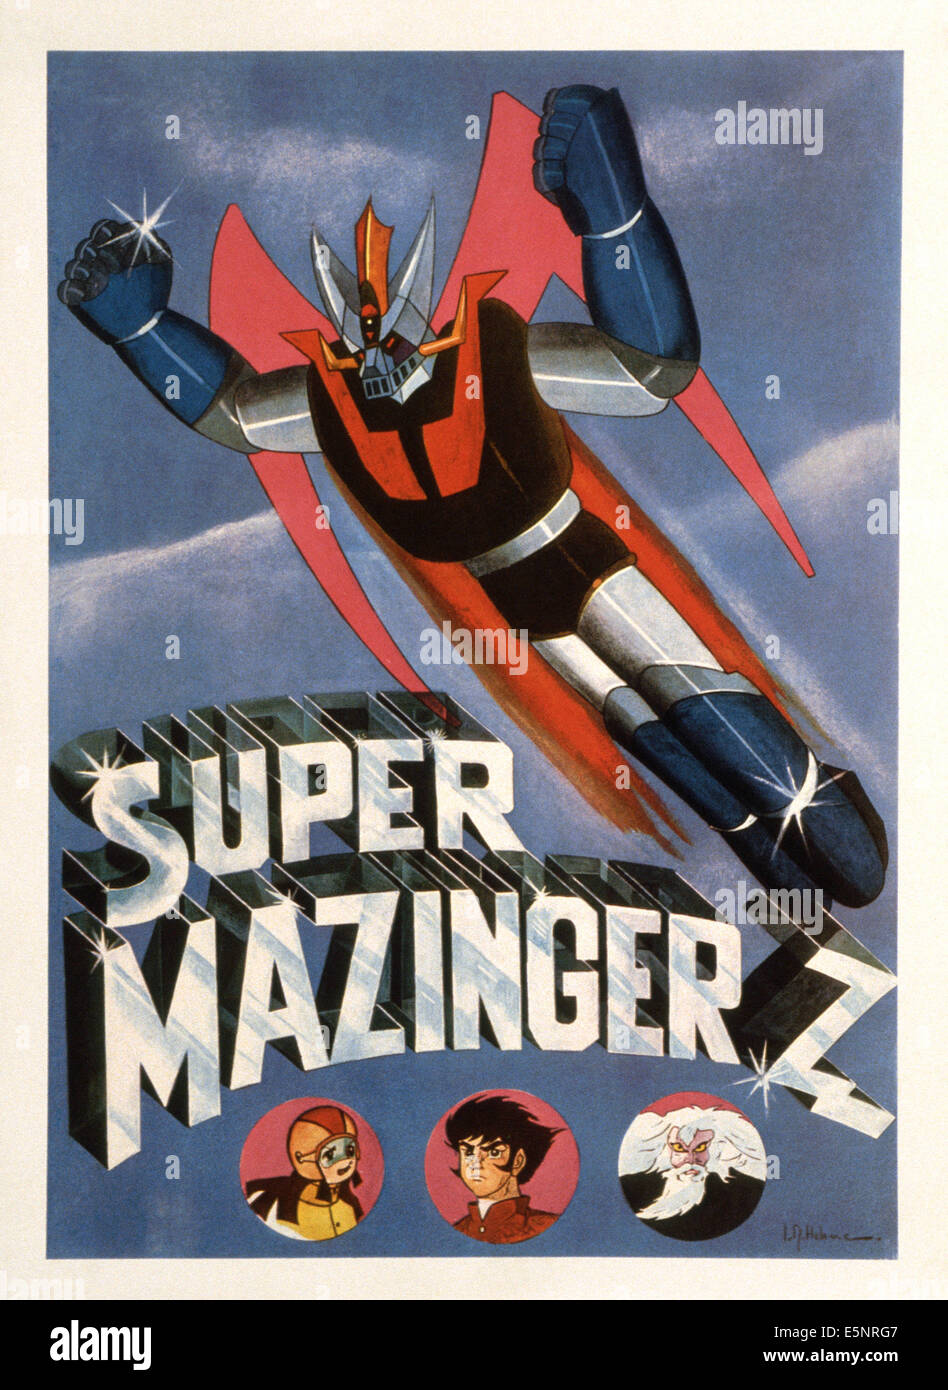 Super Mazinger Z Aka Maziger Z Vs Devilman Us Spanish Language Poster Art 1973 Stock Photo Alamy